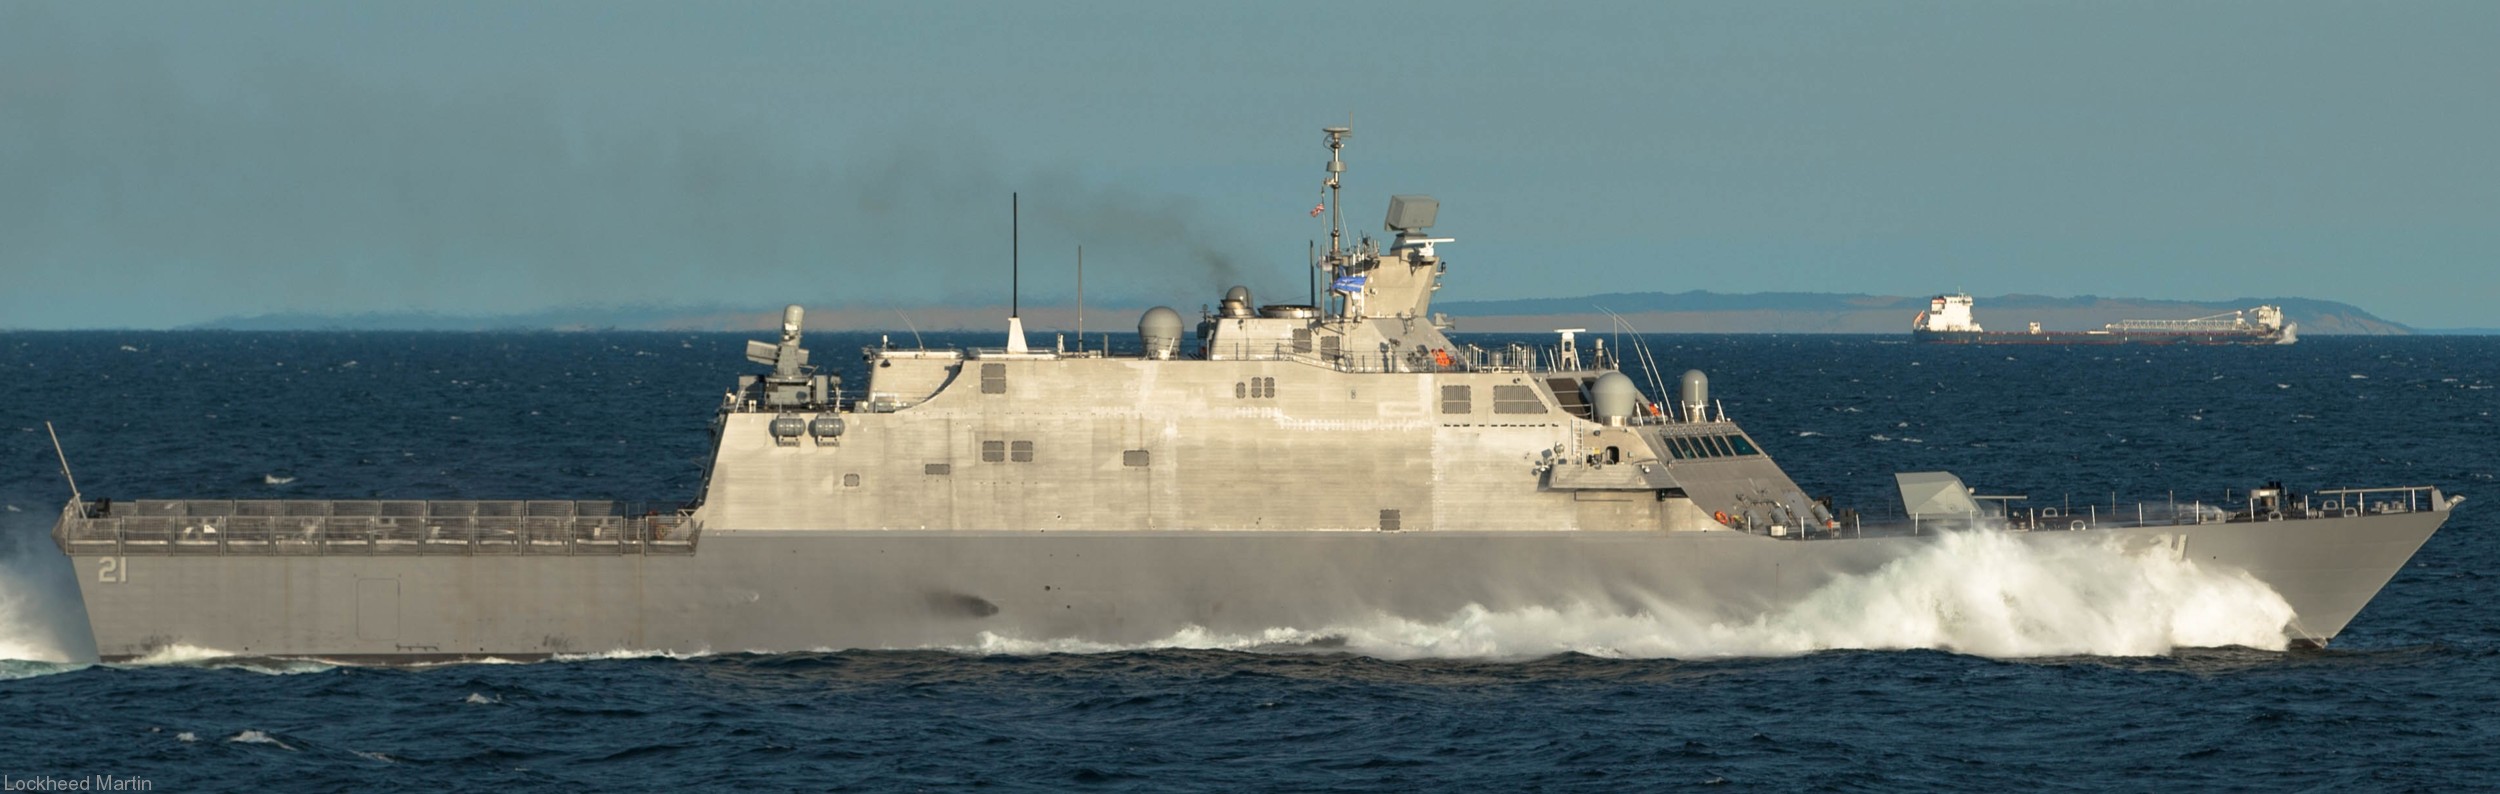 lcs-21 uss minneapolis saint paul freedom class littoral combat ship us navy 03 lockheed martin